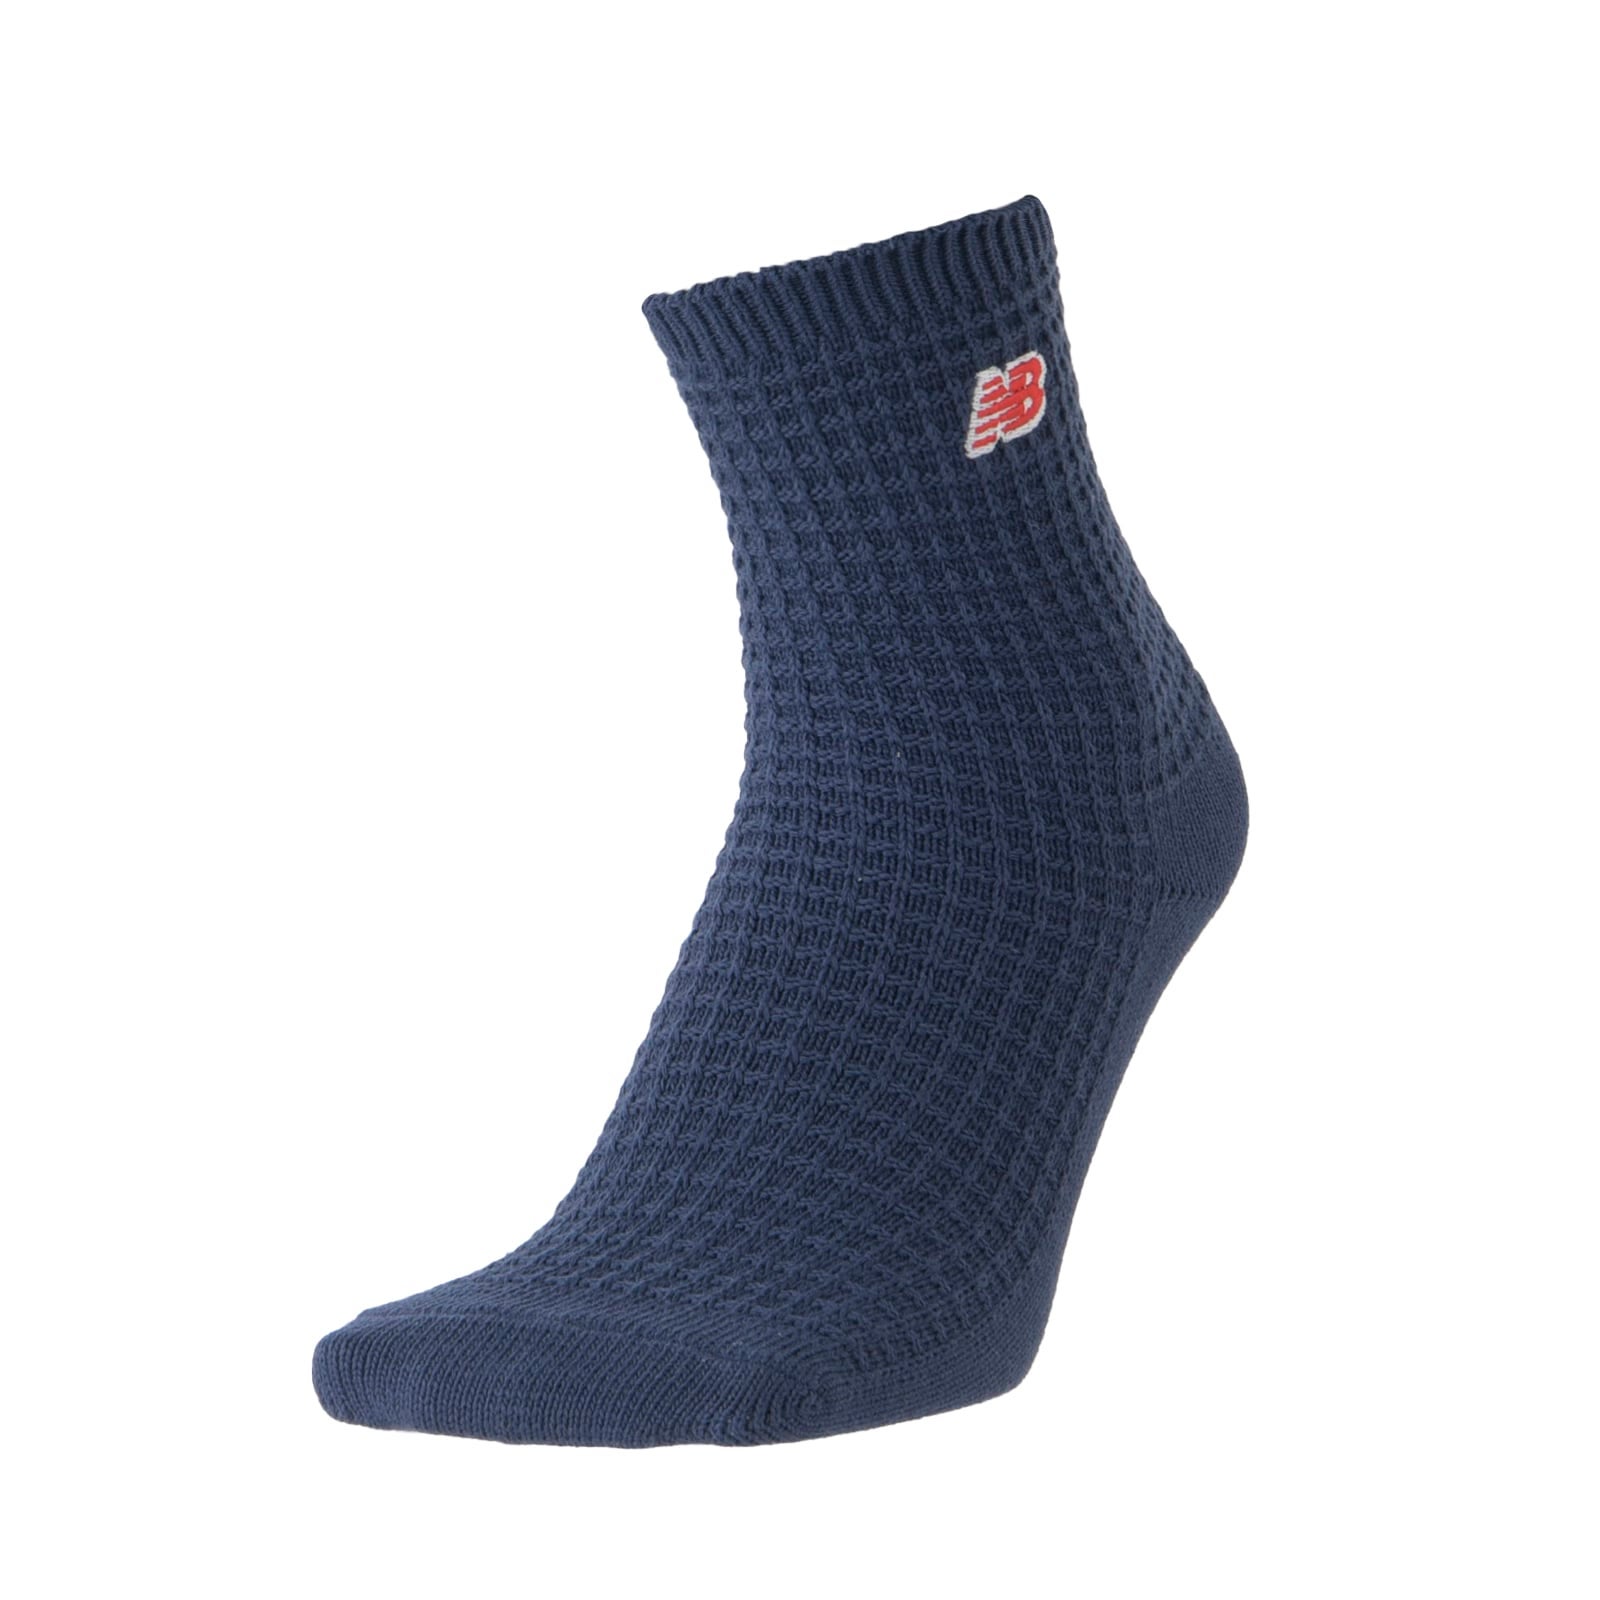 Waffle knit ankle 2P socks